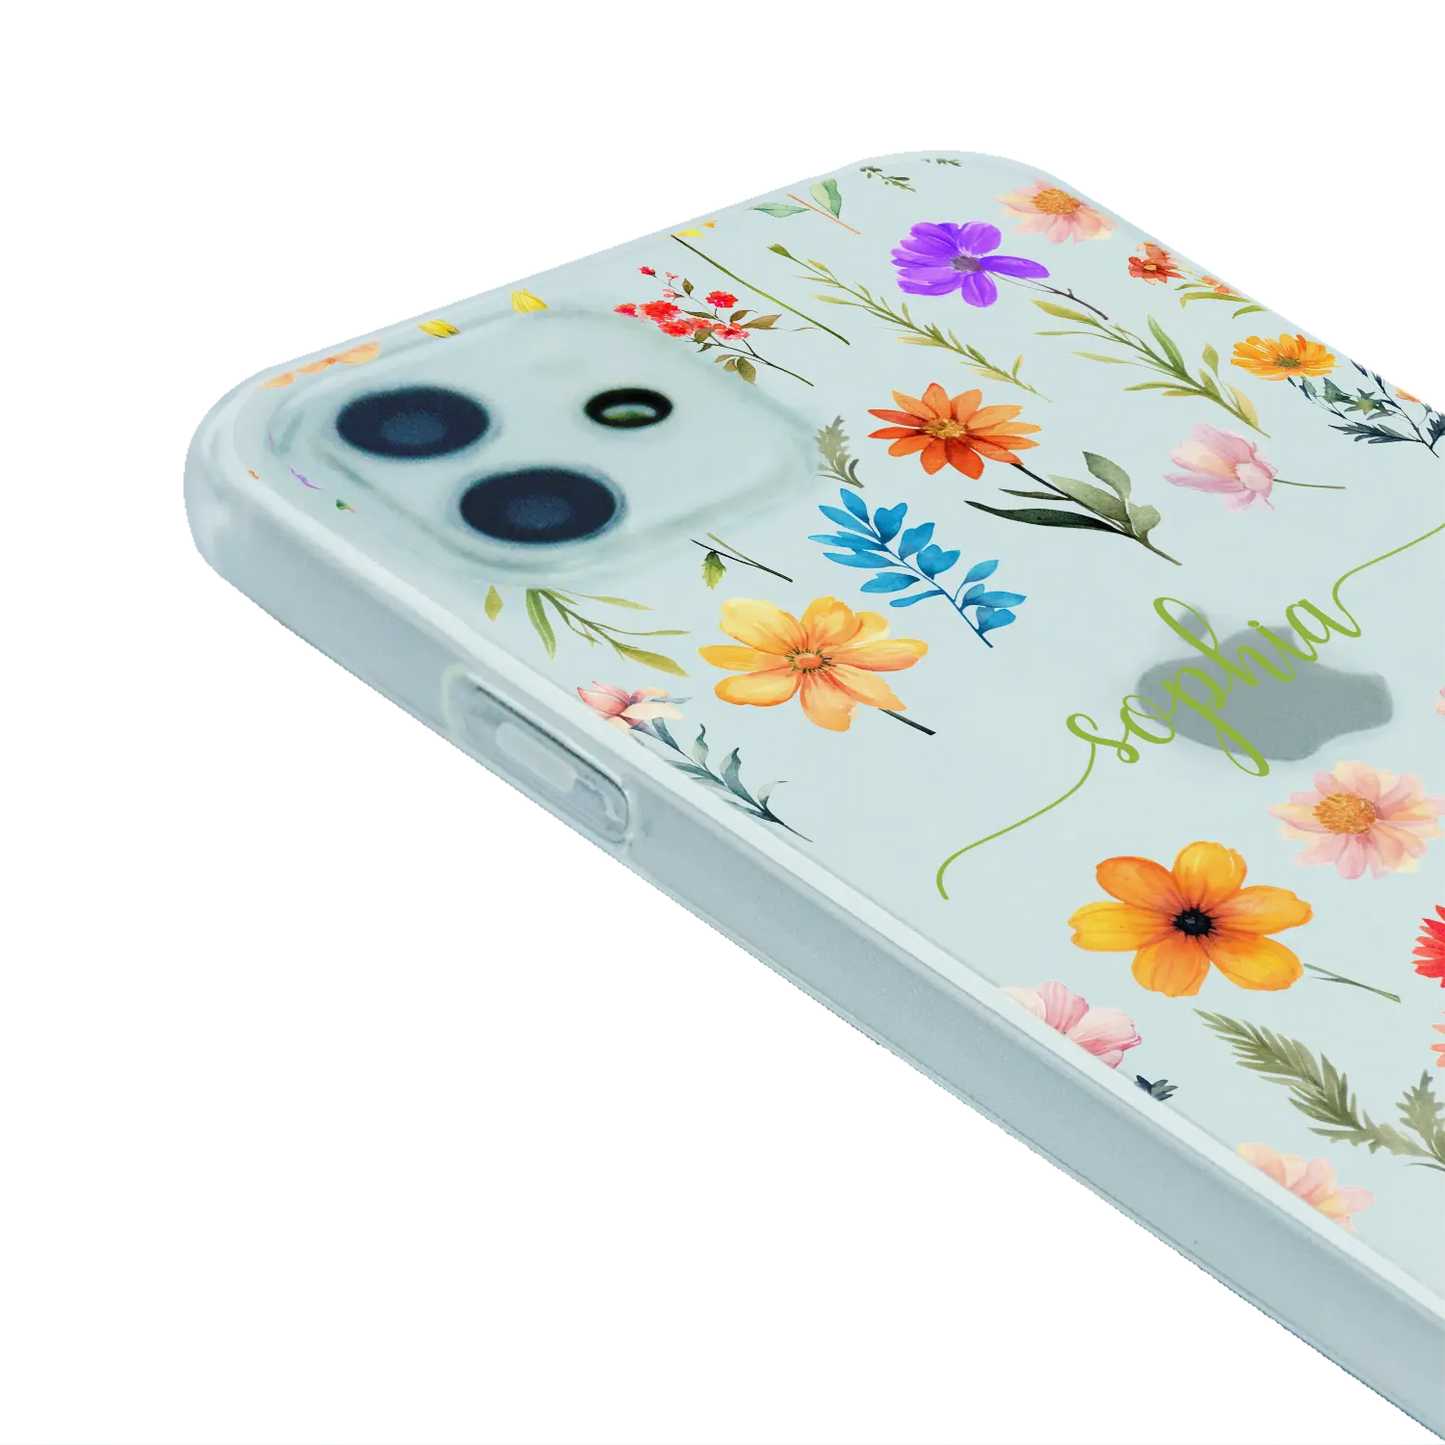 Flowers - Personalised iPhone case